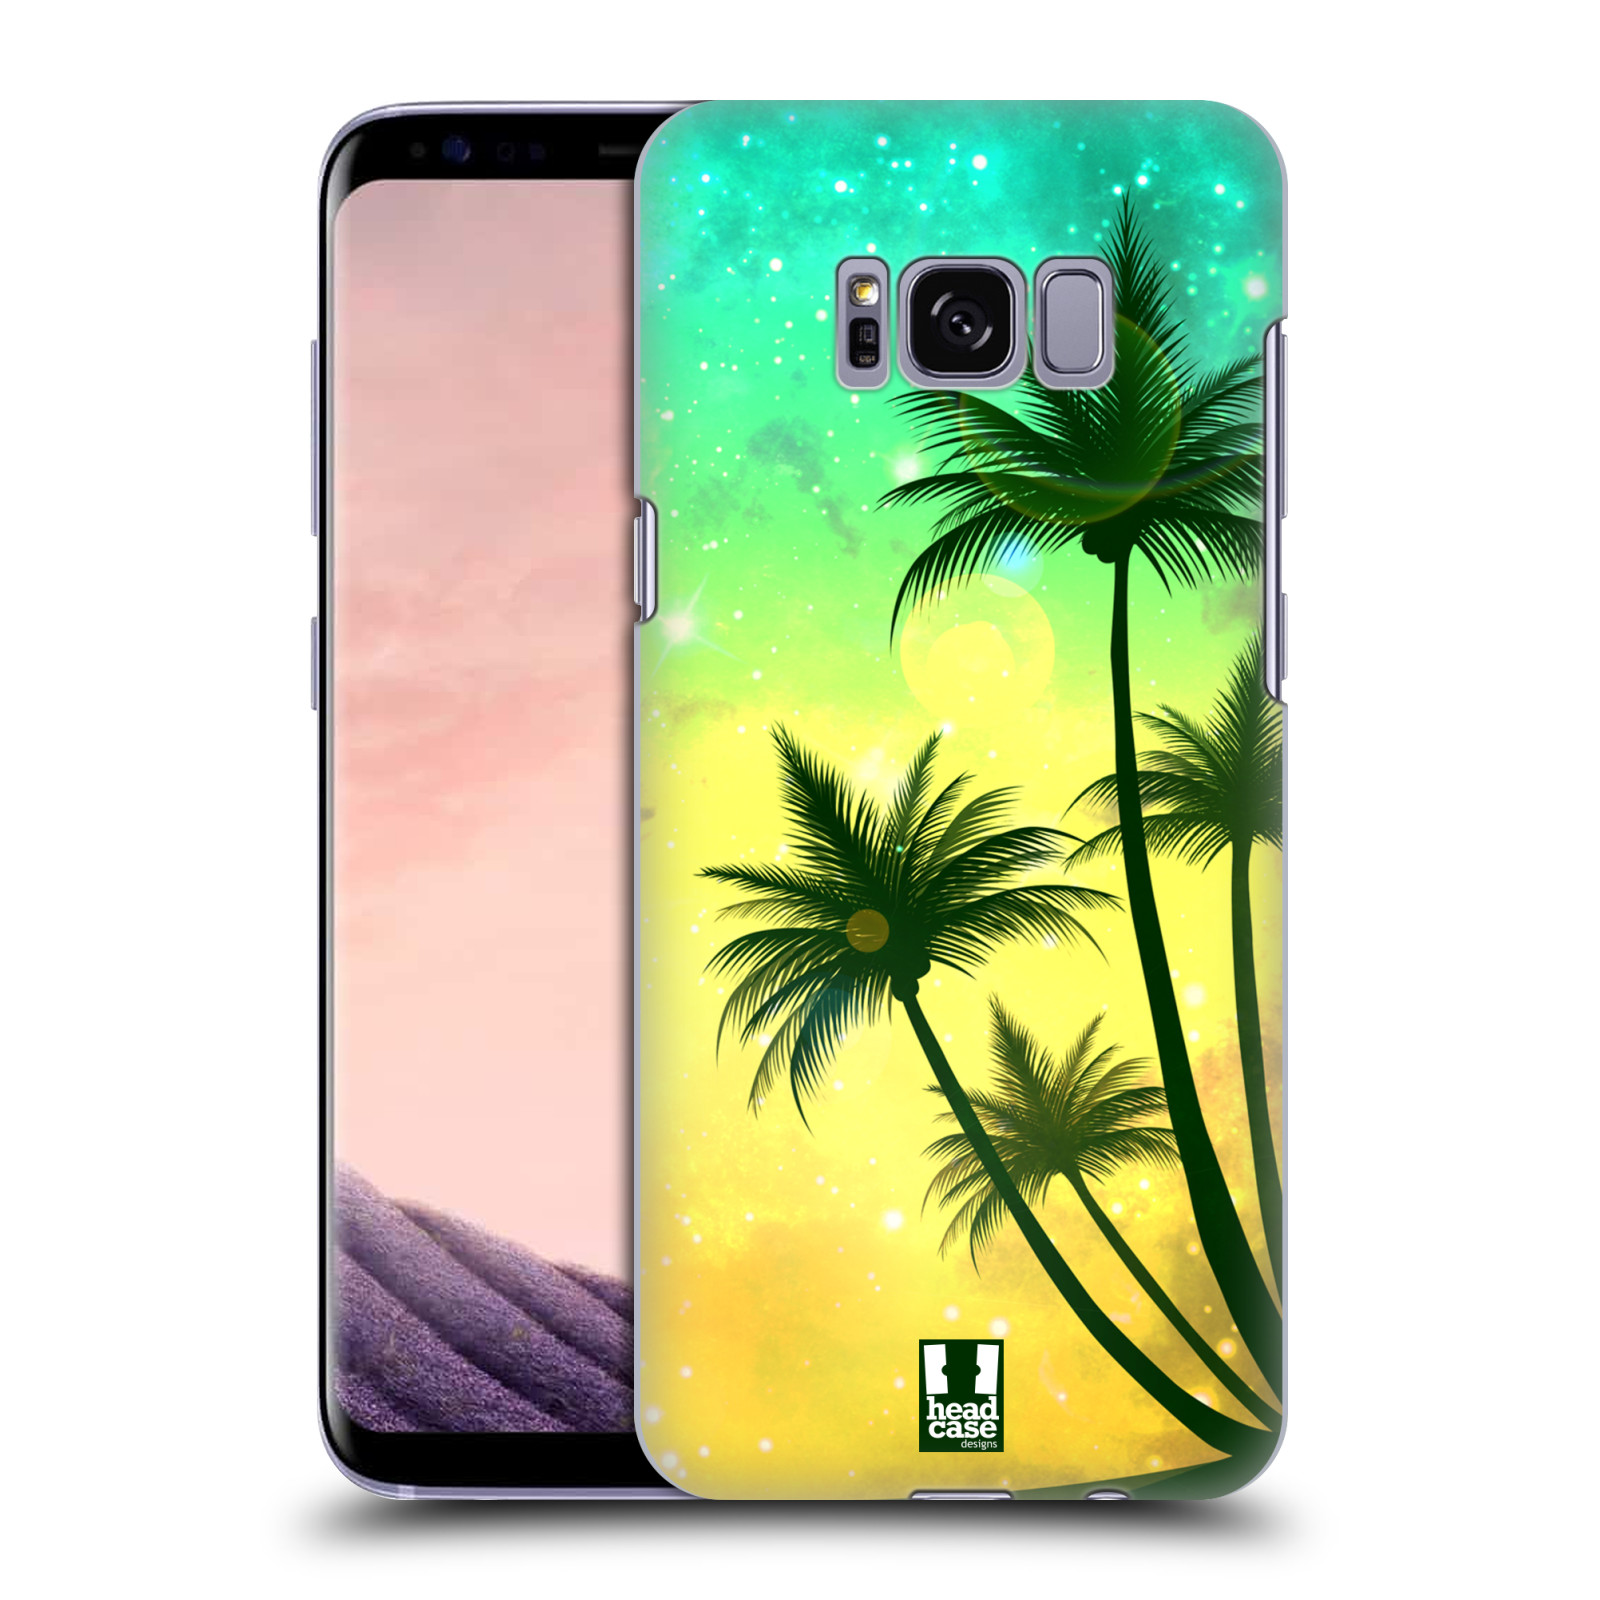 HEAD CASE plastový obal na mobil Samsung Galaxy S8 vzor Kreslený motiv silueta moře a palmy TYRKYSOVÁ